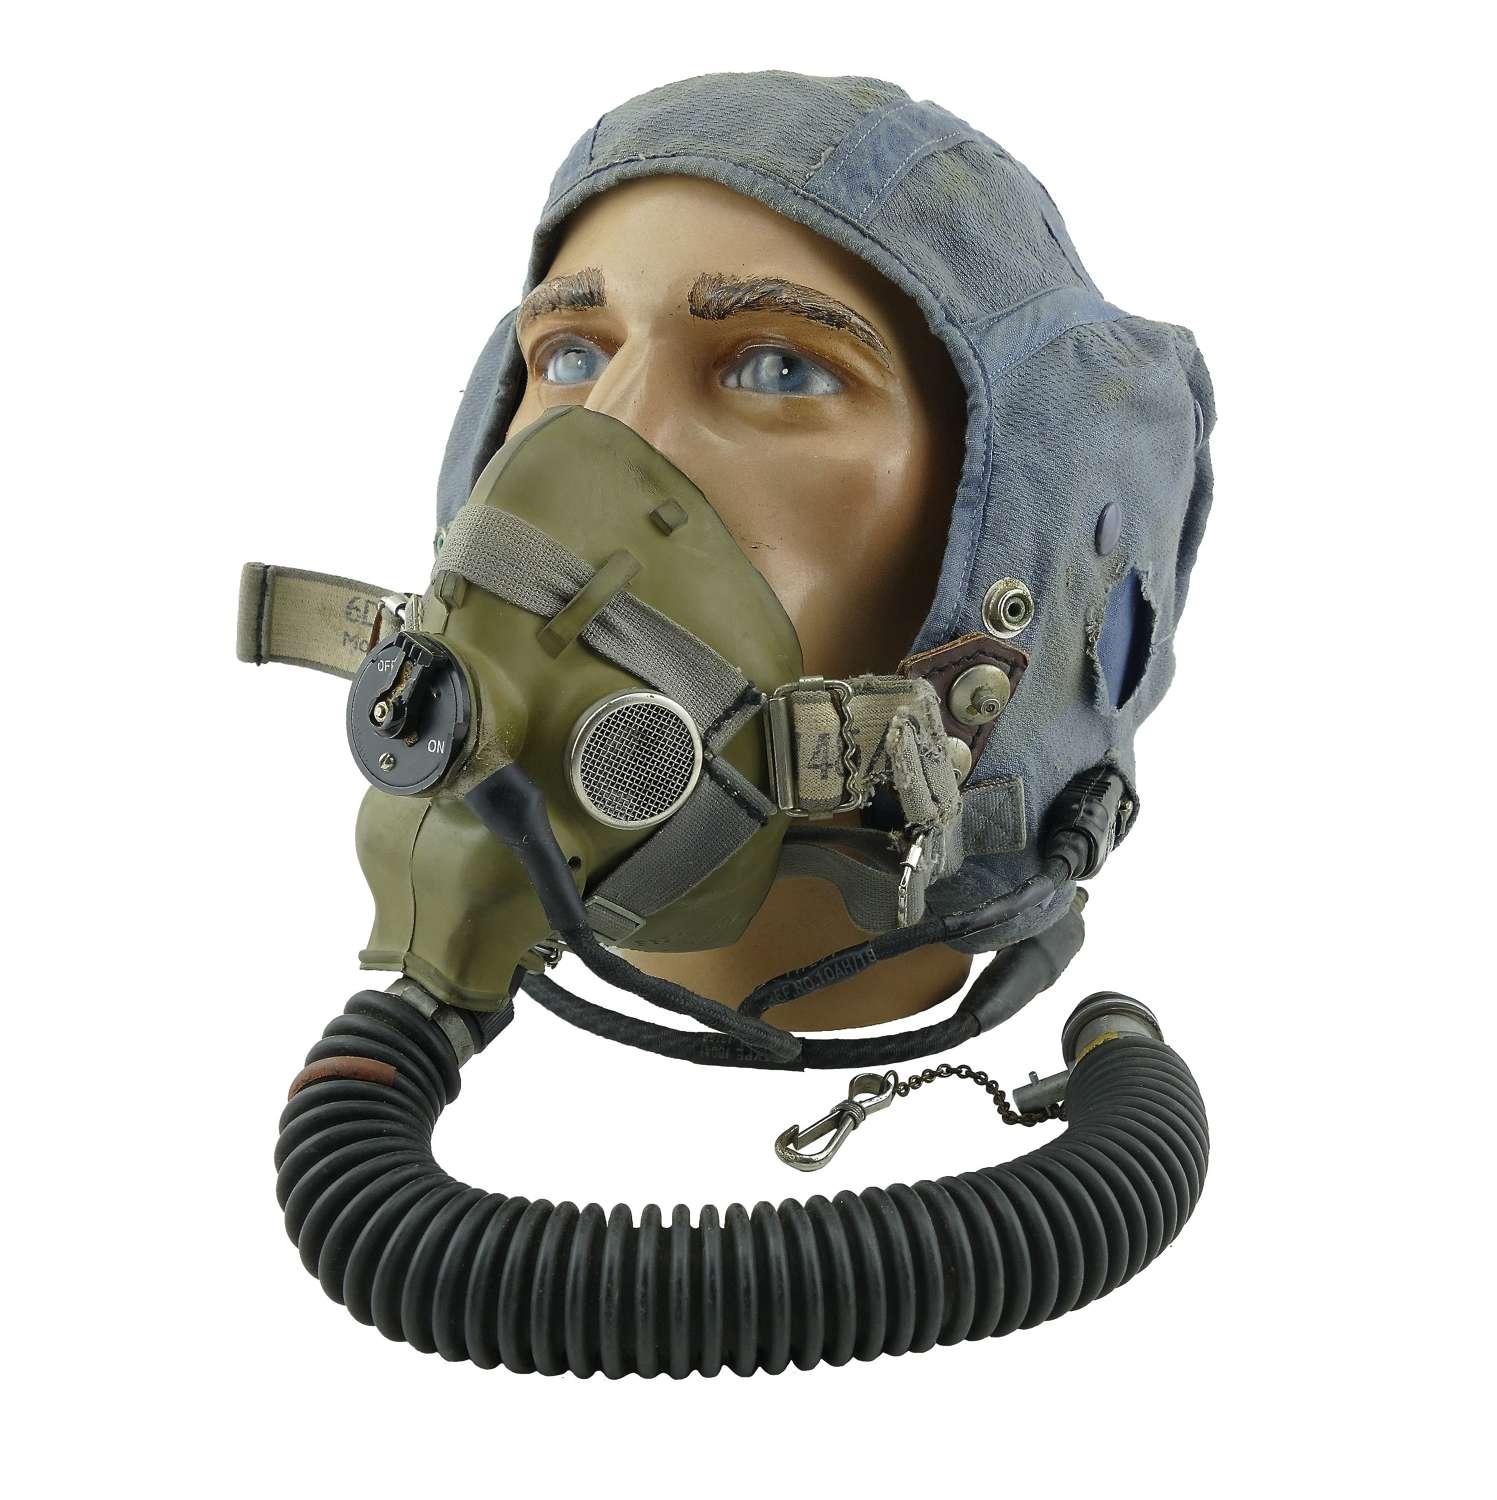 Battle of Britain pilot's RAF type F Helmet c/w oxygen mask